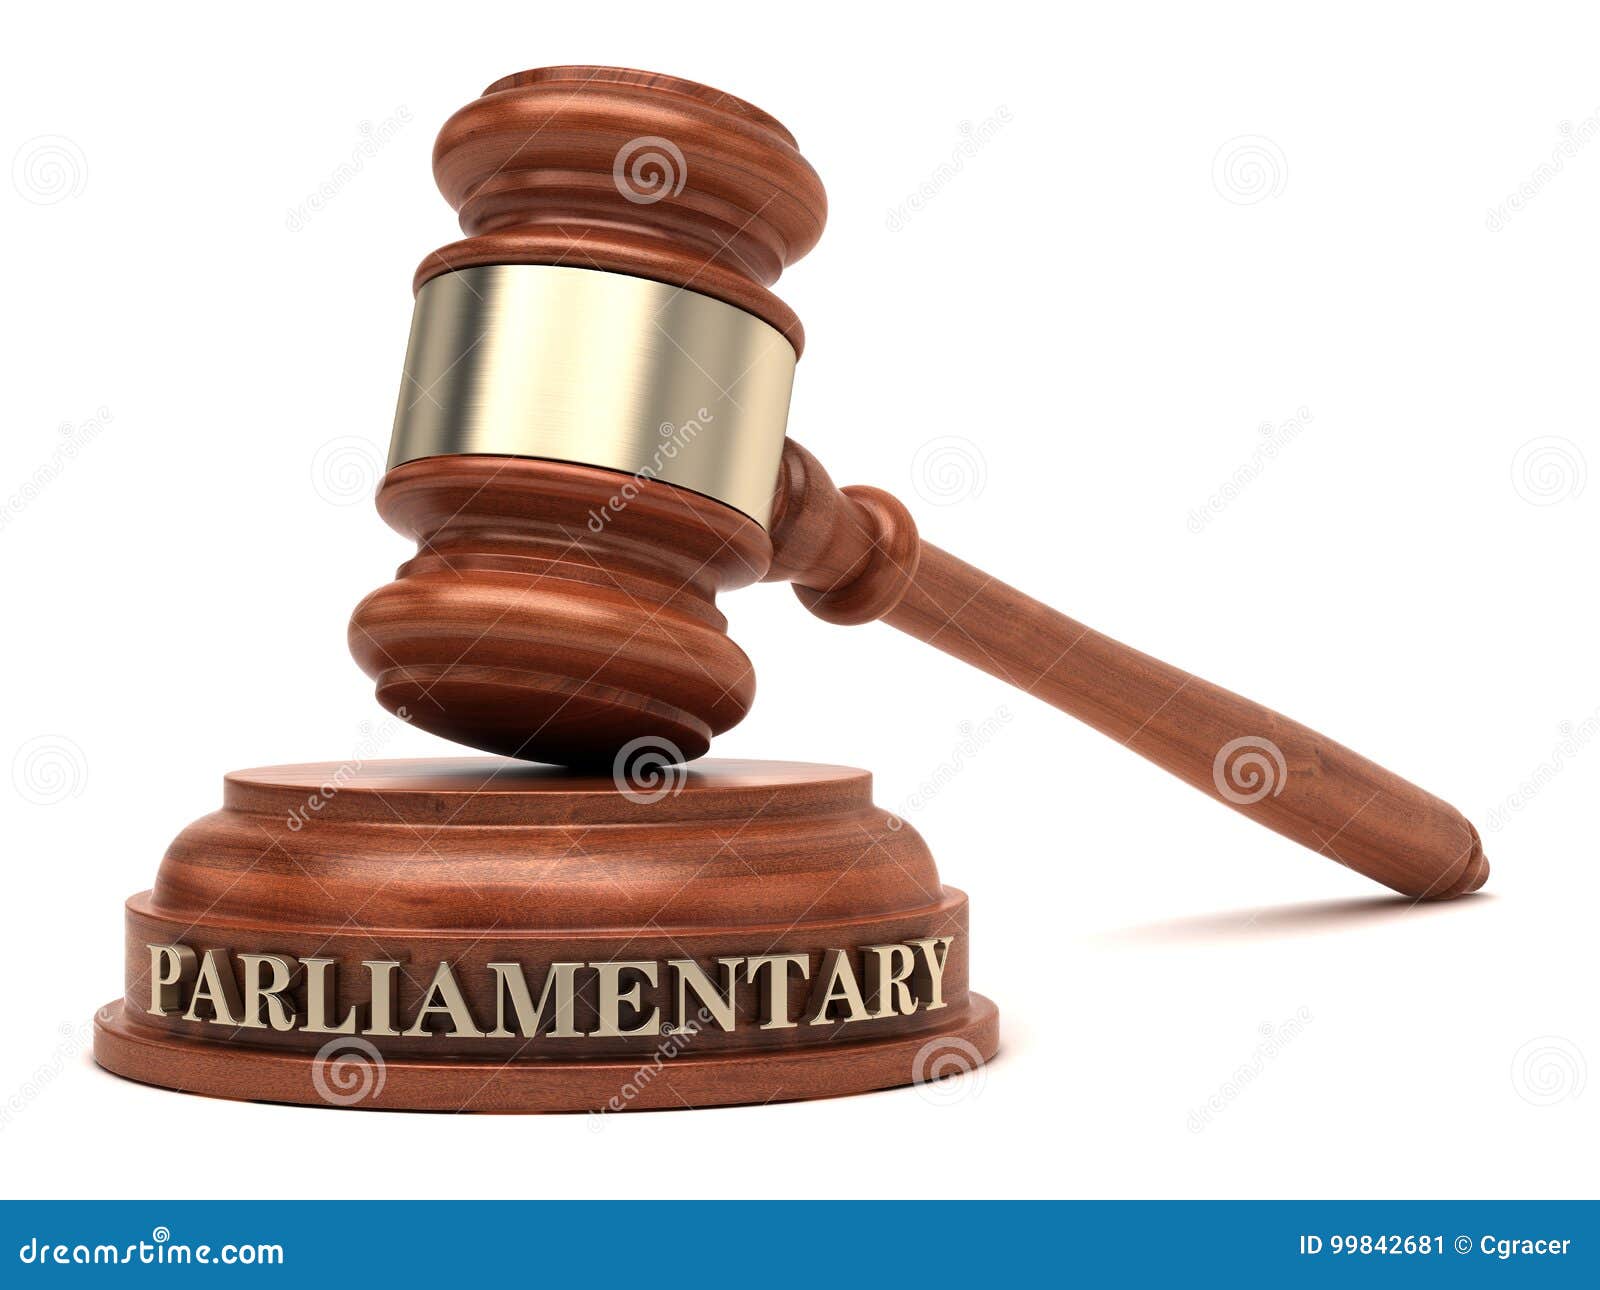 parliamentary law